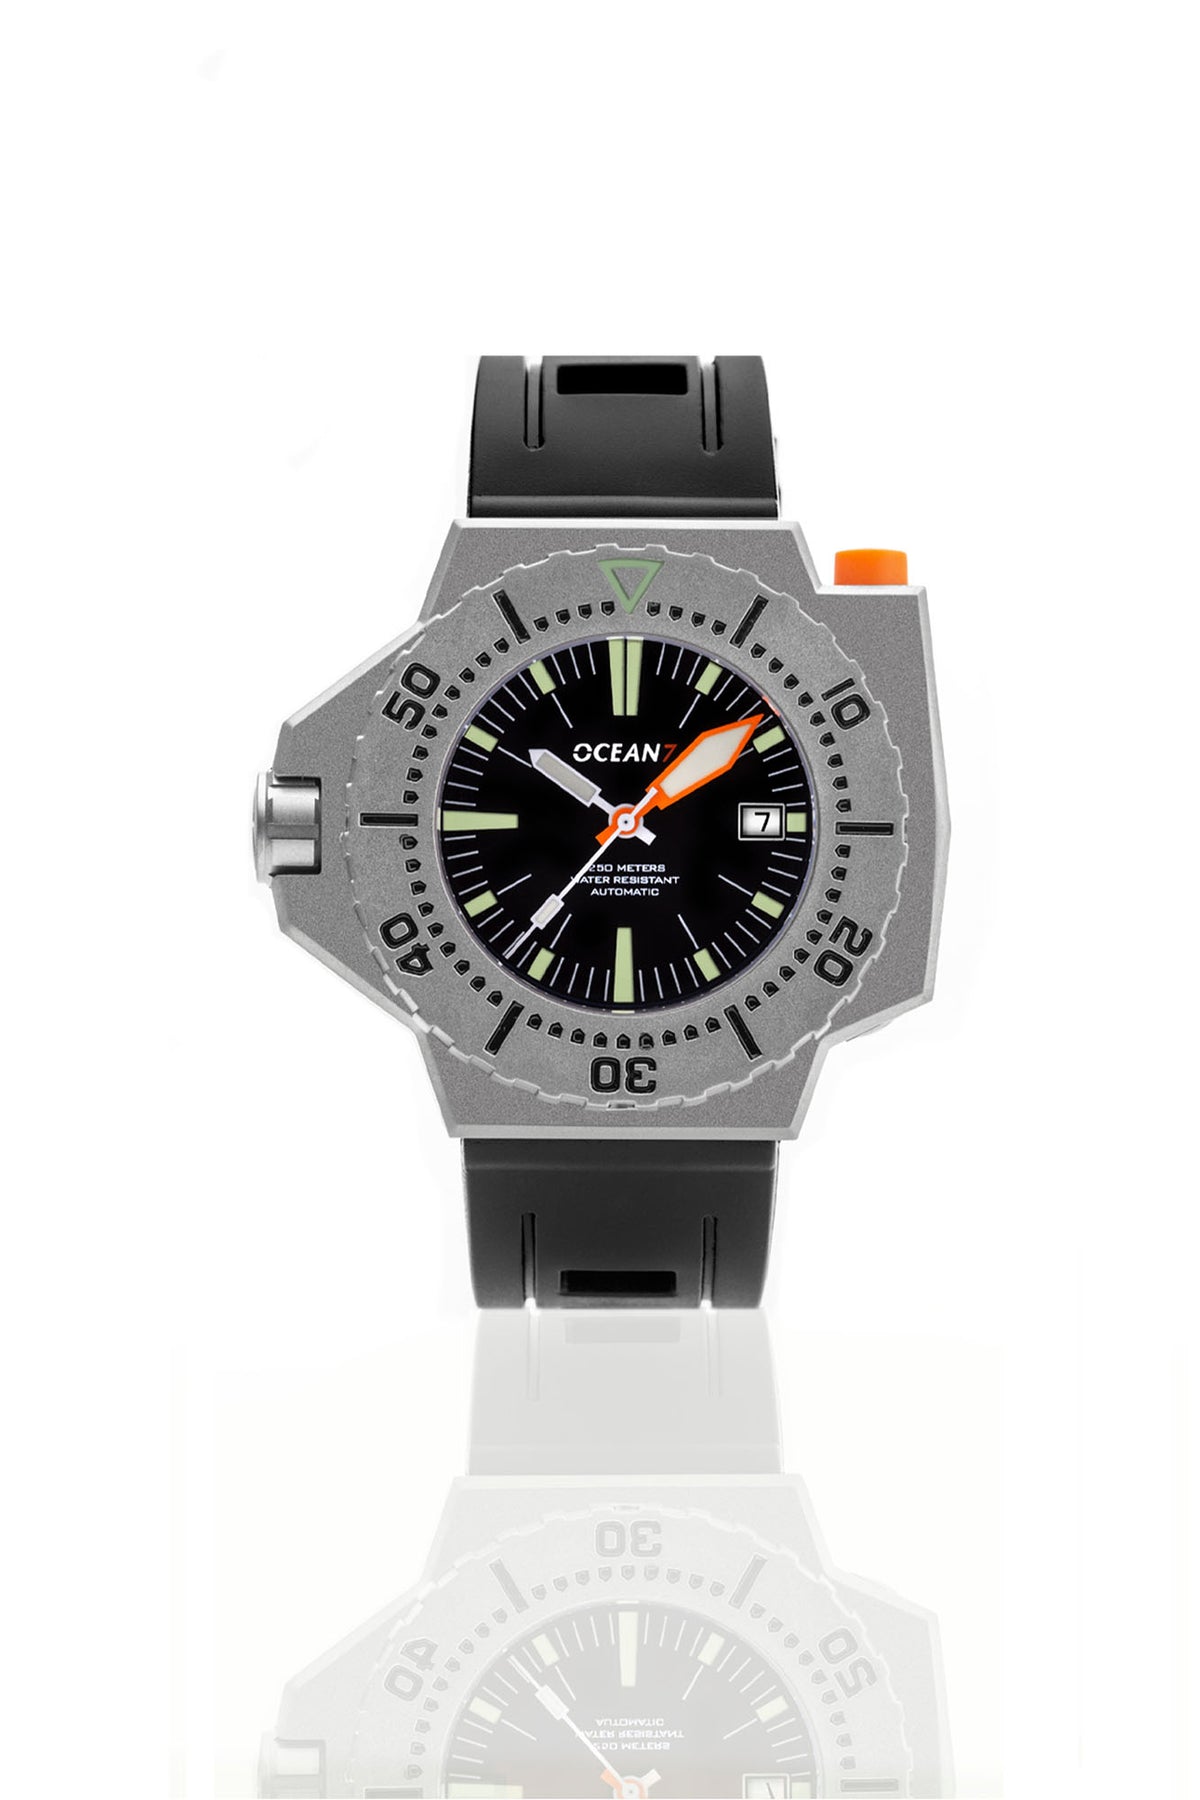 LM-7 Professional Hardened Titanium Dive Watch